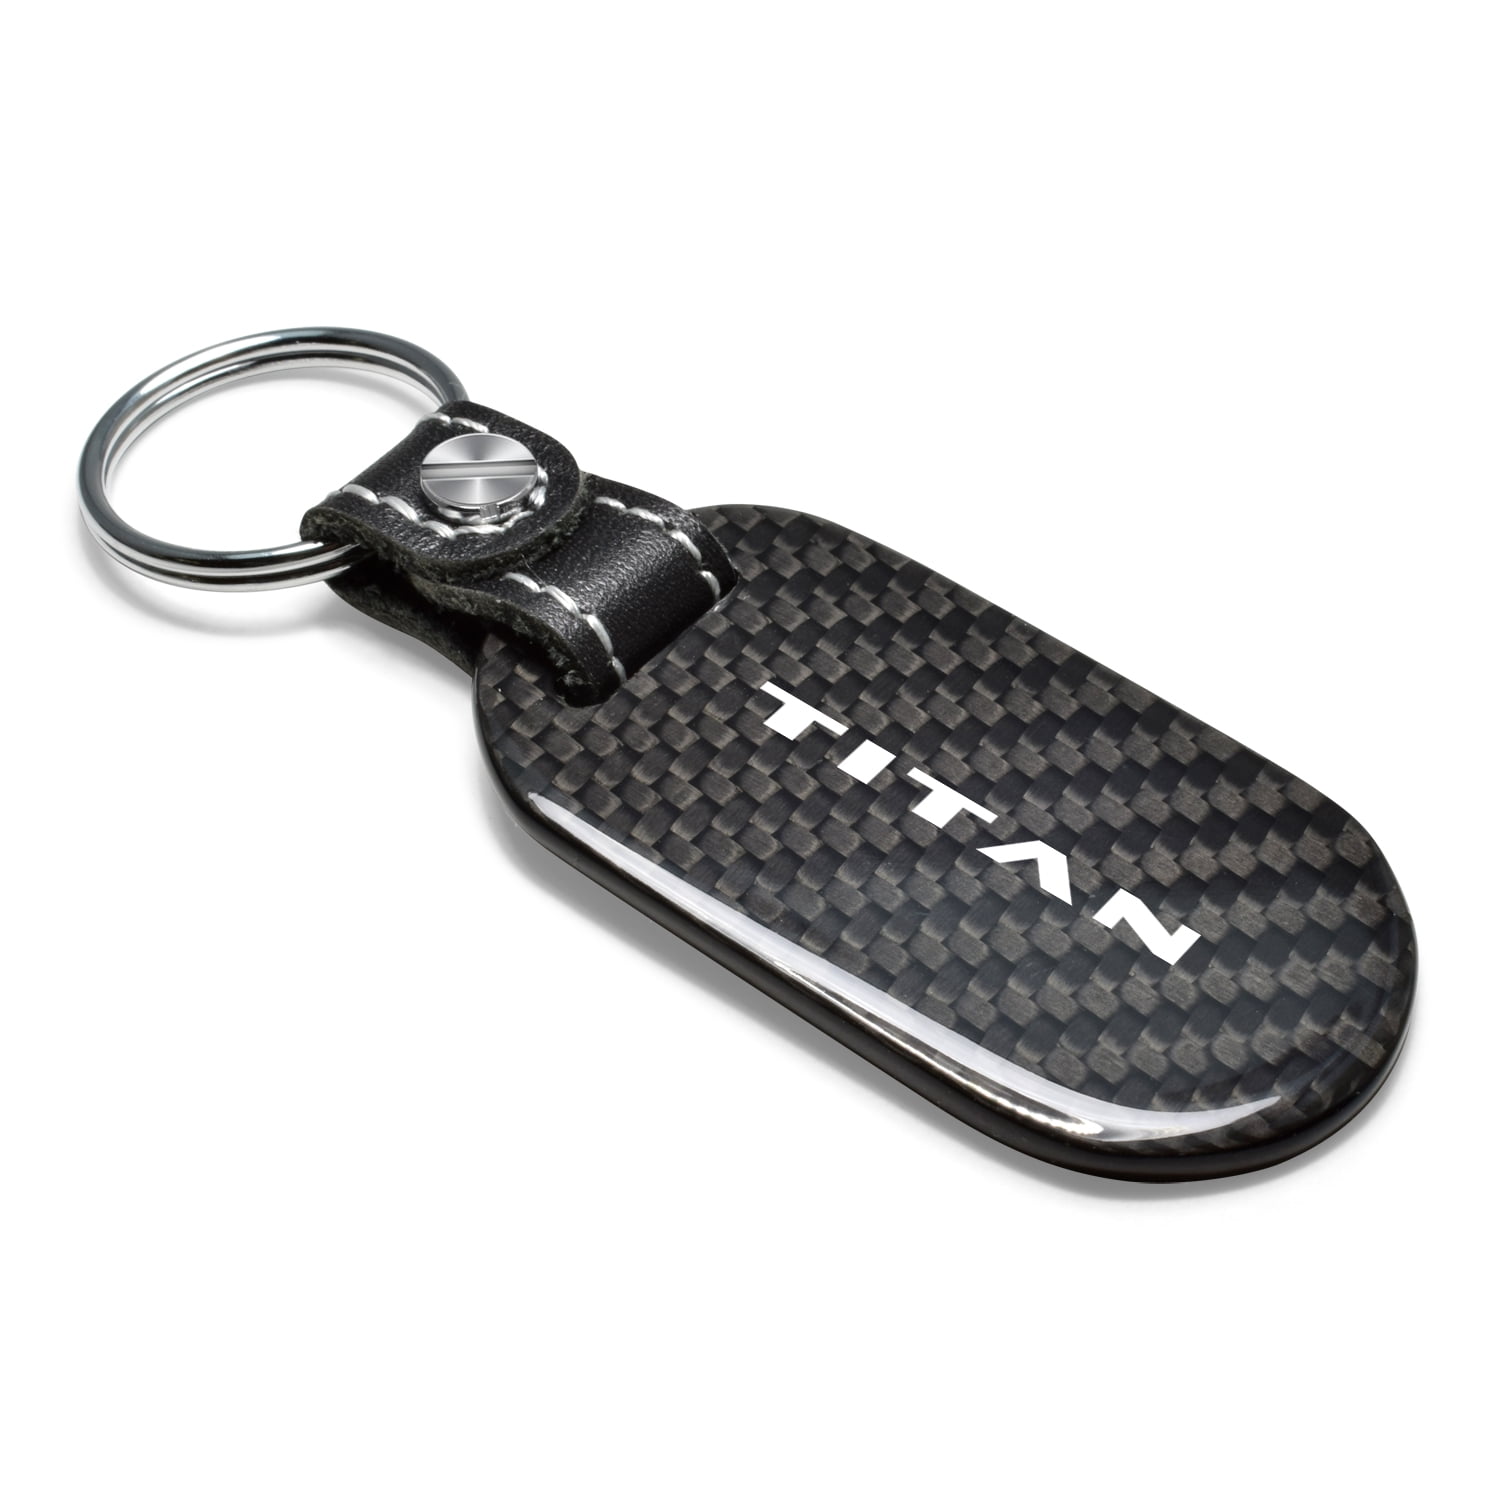 Chrysler Logo Gunmetal Black Carabiner-style Snap Hook Metal Key Chain Keychain 